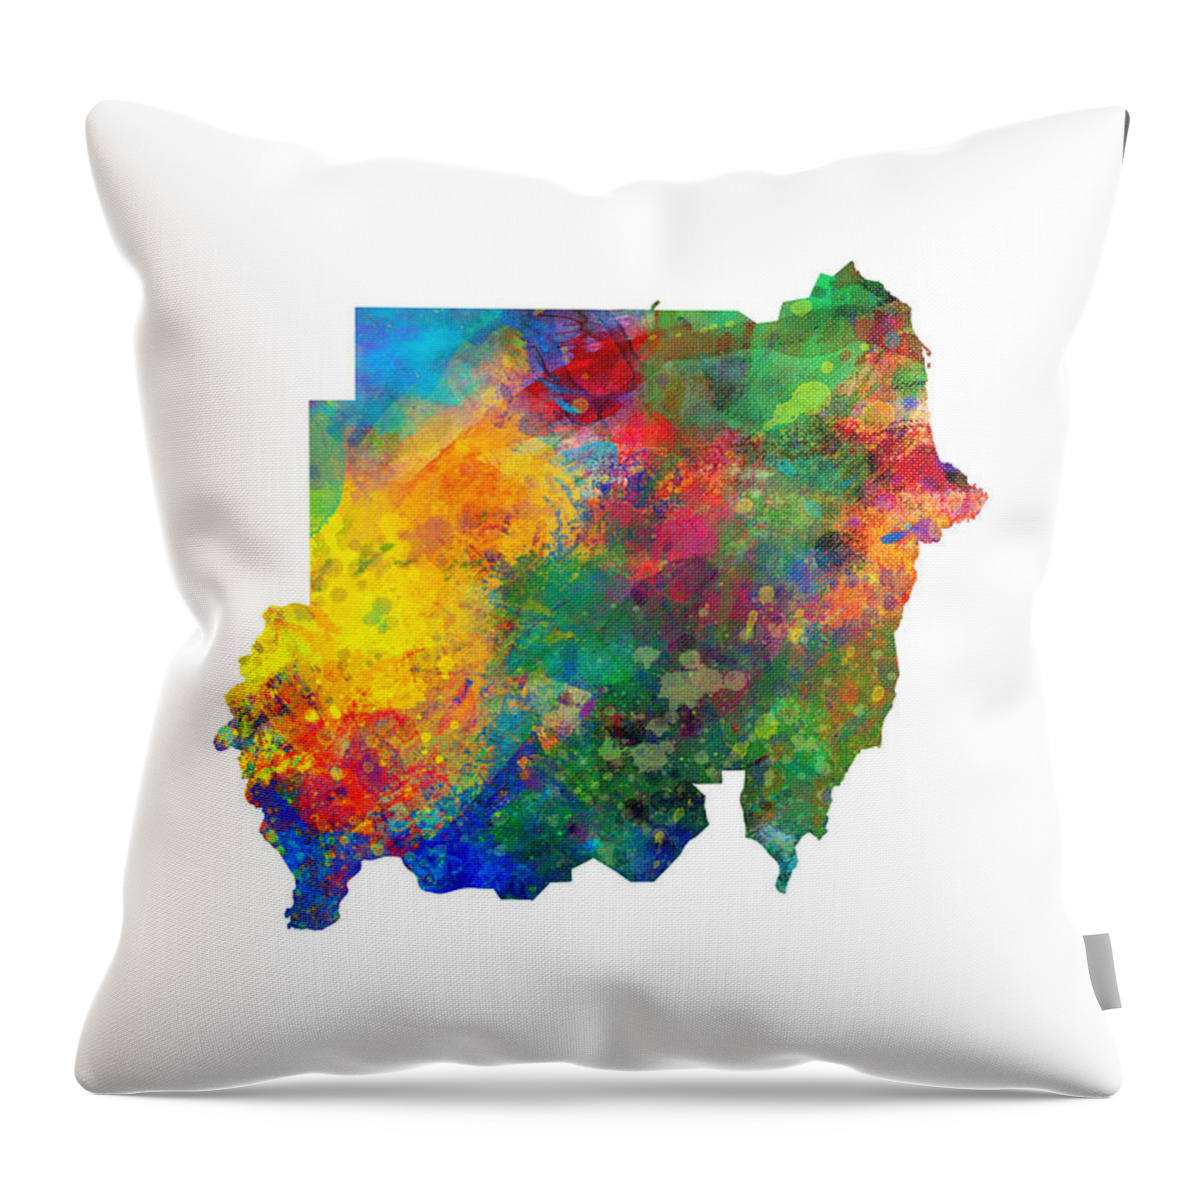 Sudan Throw Pillow featuring the digital art Sudan Watercolor Map #1 by Michael Tompsett